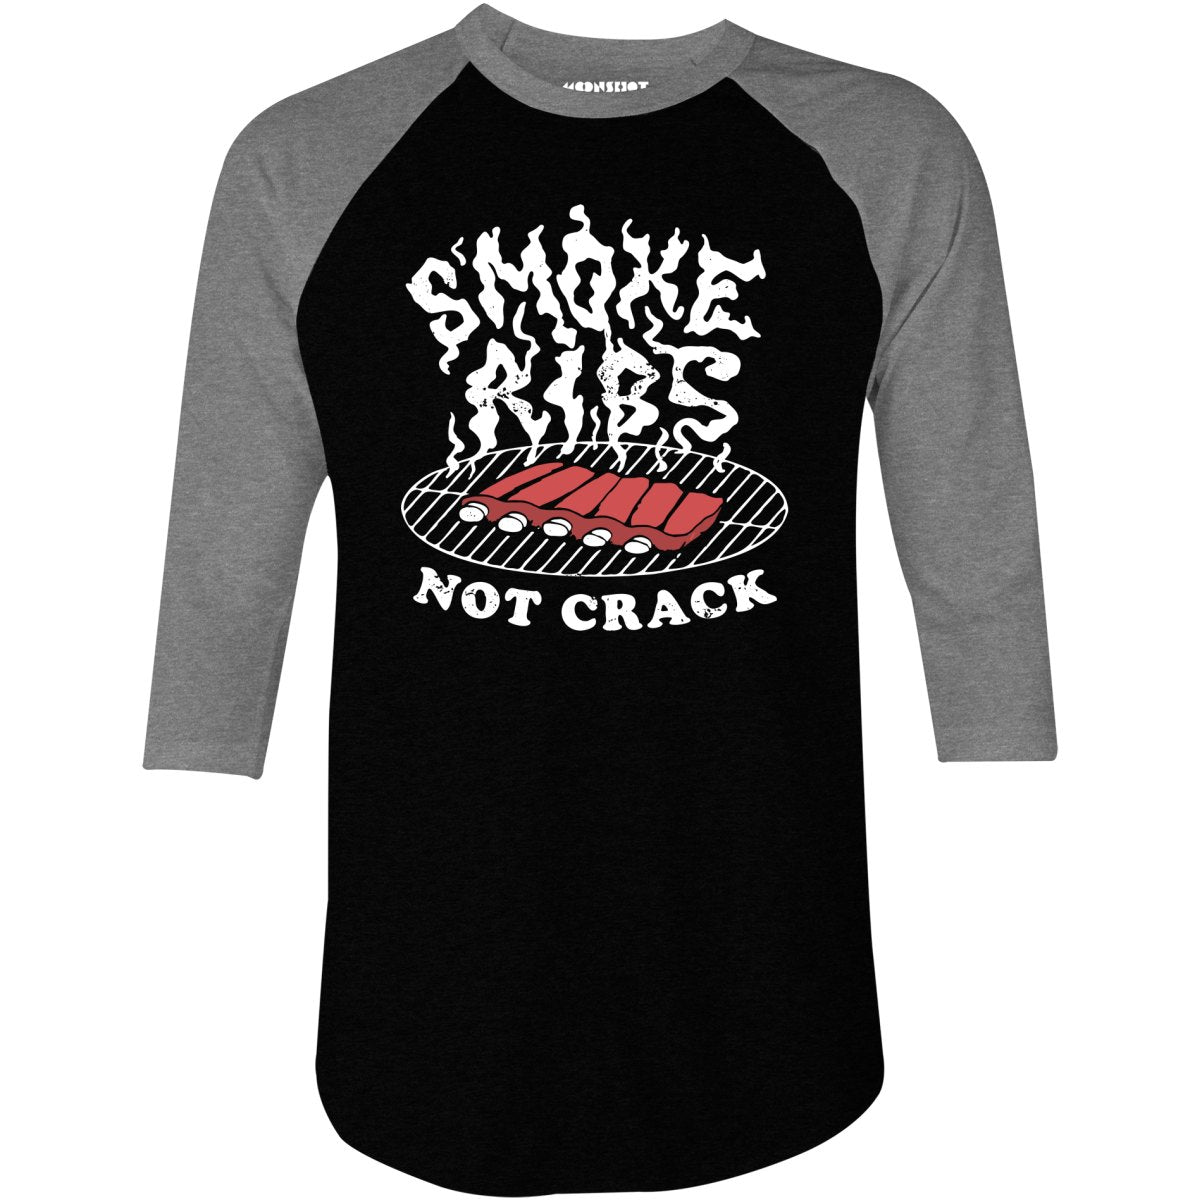 Smoke Ribs Not Crack - 3/4 Sleeve Raglan T-Shirt